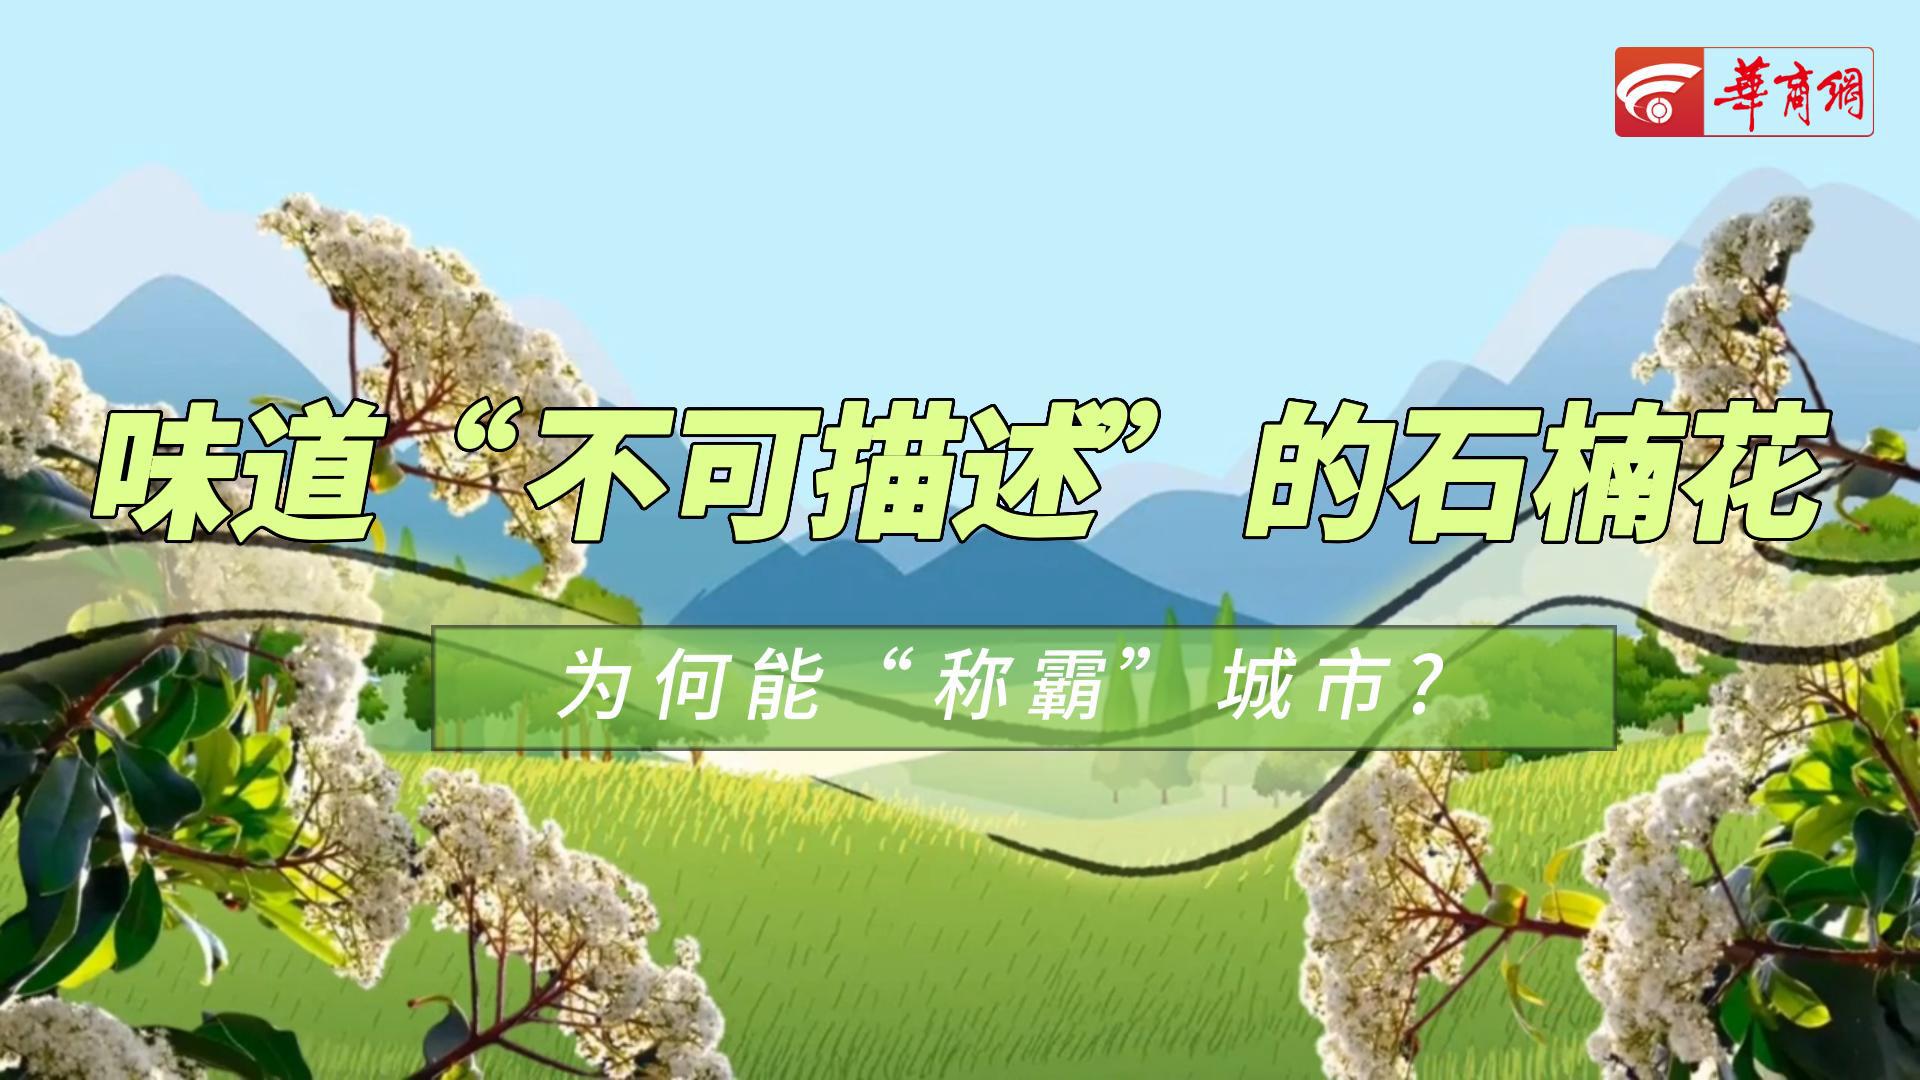 Shǎn动实验室|味道“不可描述”的石楠花 为何能“称霸城市”？